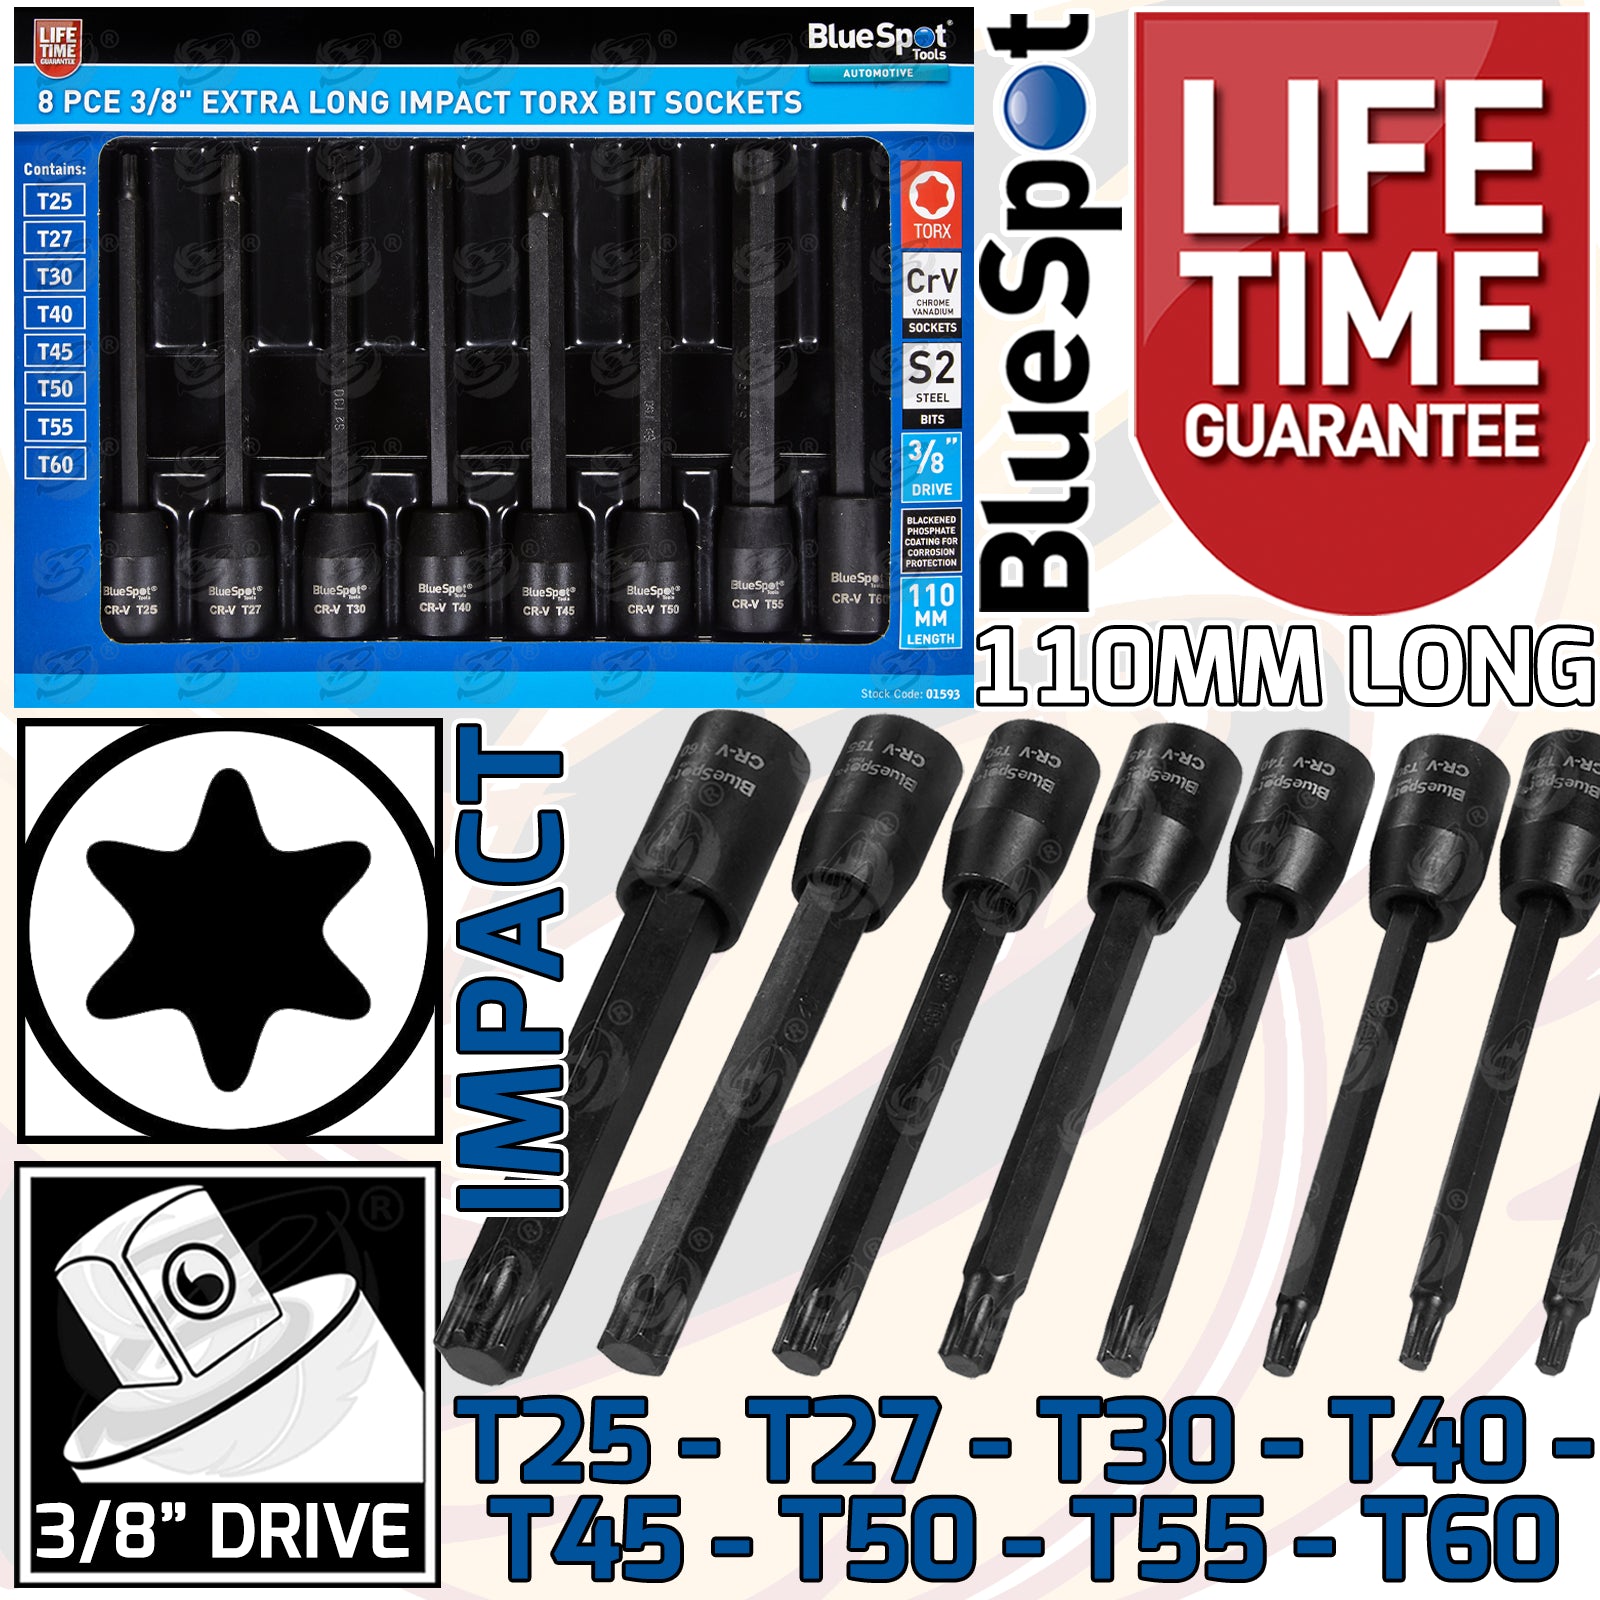 BLUESPOT 8PCS 3/8" DRIVE EXTRA LONG IMPACT TORX BIT SOCKETS T25 - T60